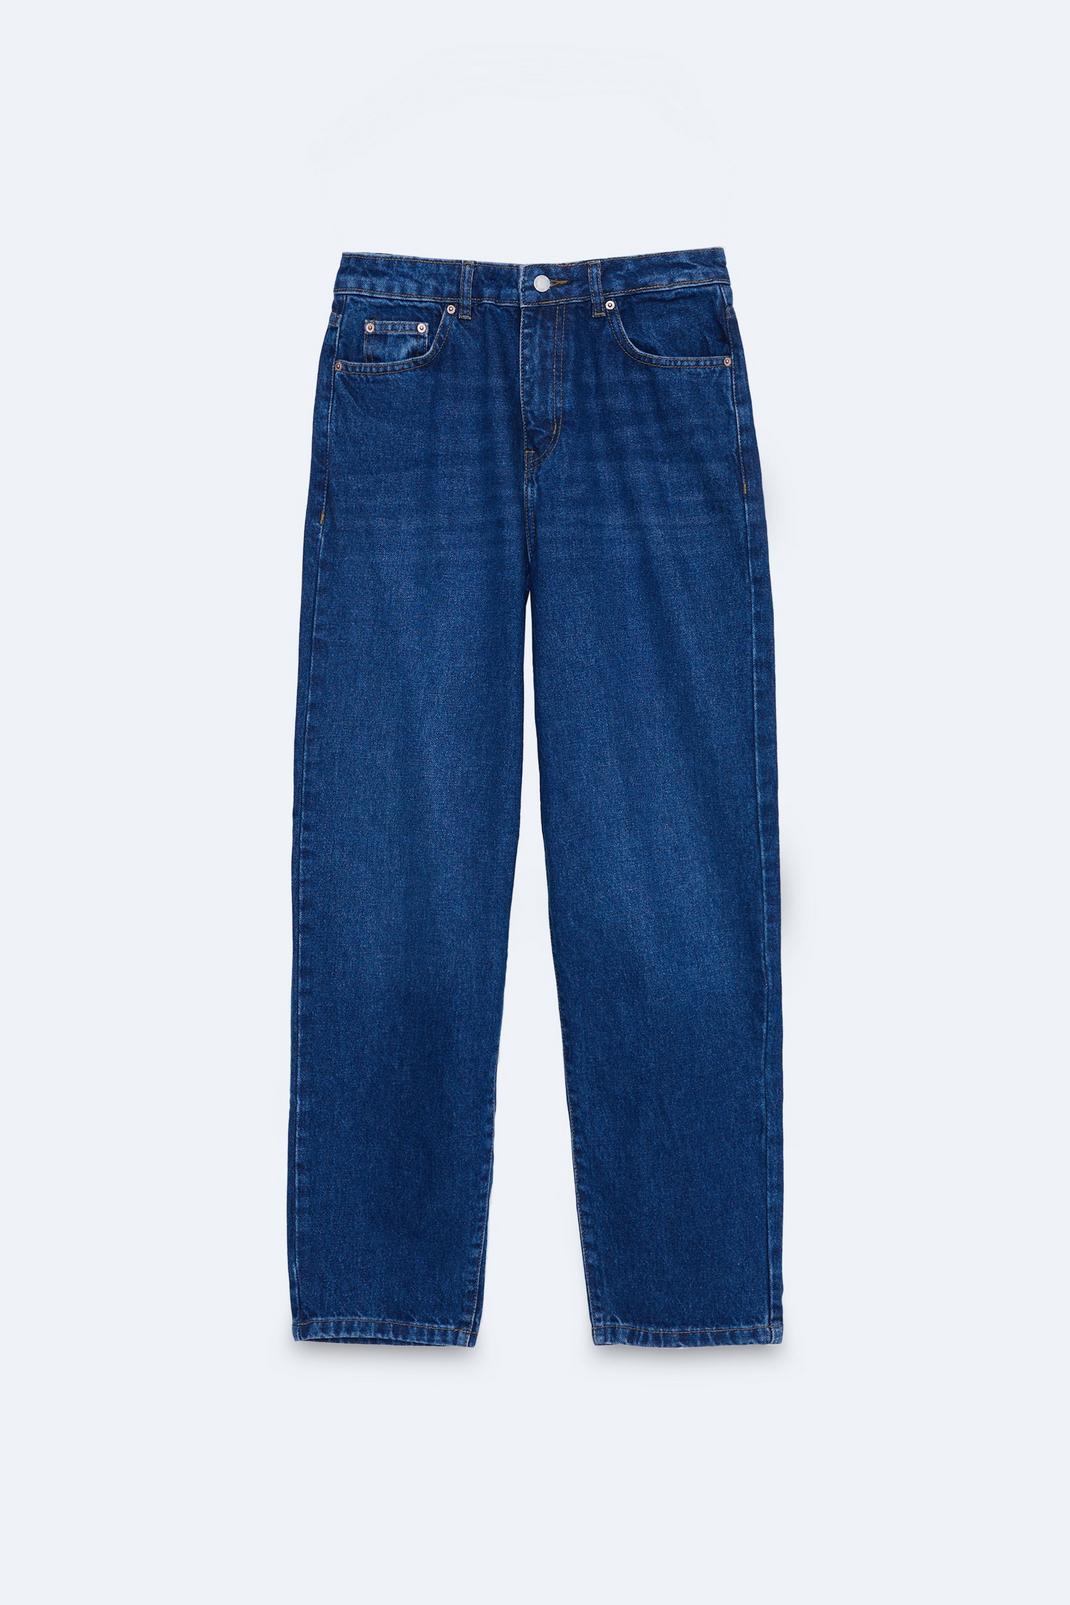 Buy Vintage Talbots Mom Jeans High Waist Denim Made in USA Size 24